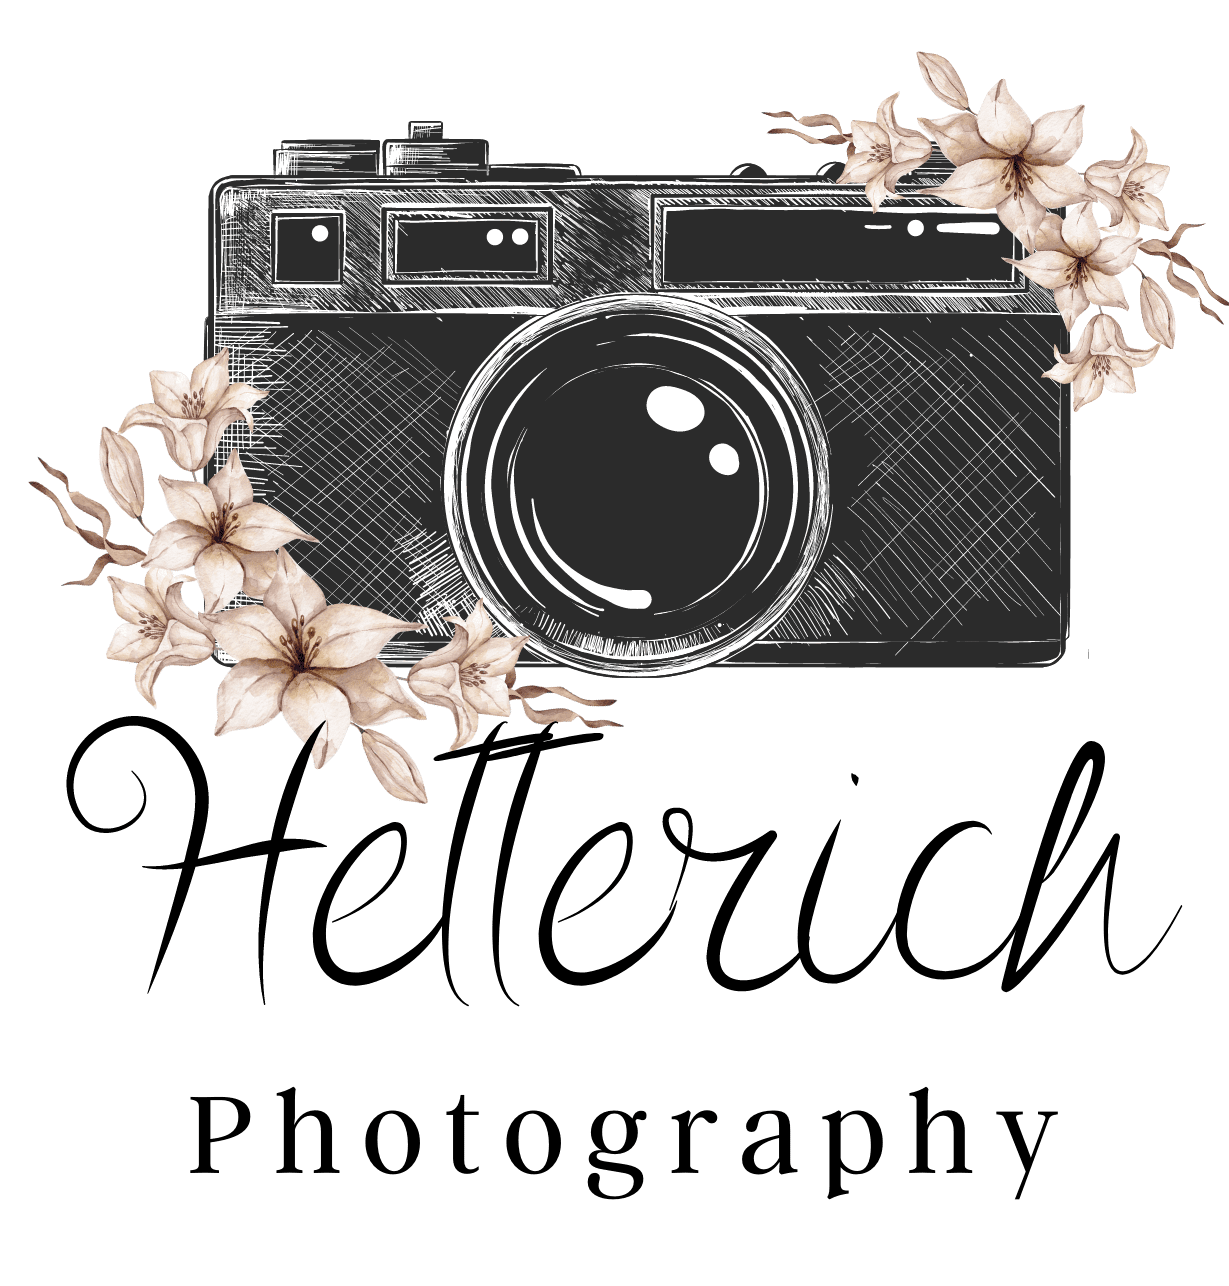 Hetterich Photography